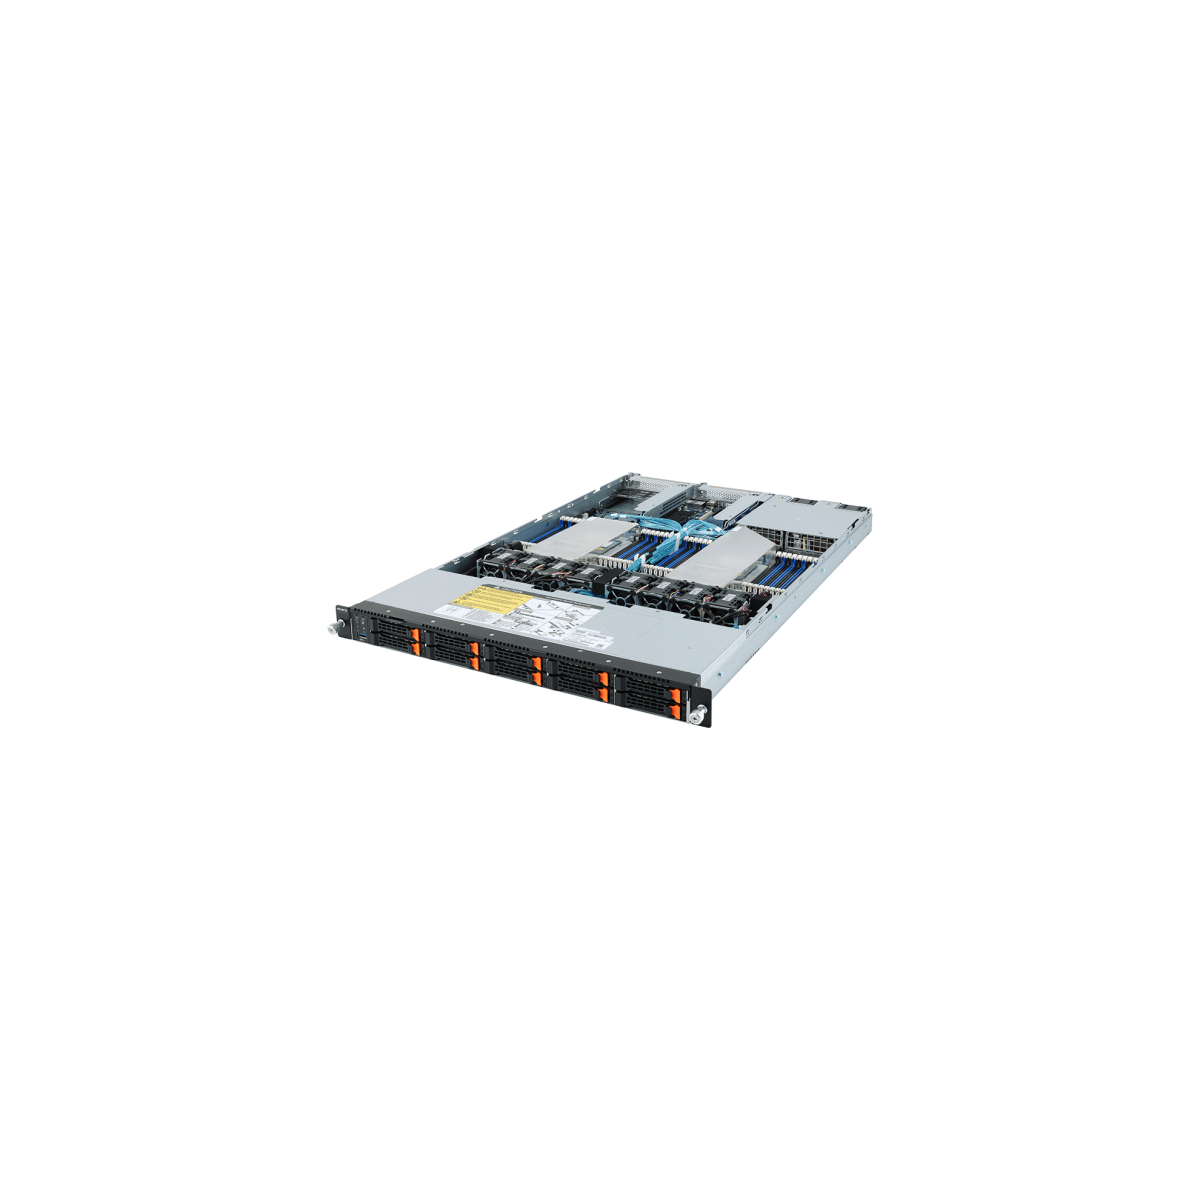 Gigabyte R182-Z92 rev. 100 - Server - Rack-Montage - 1U - zweiweg - keine CPU - Barebone